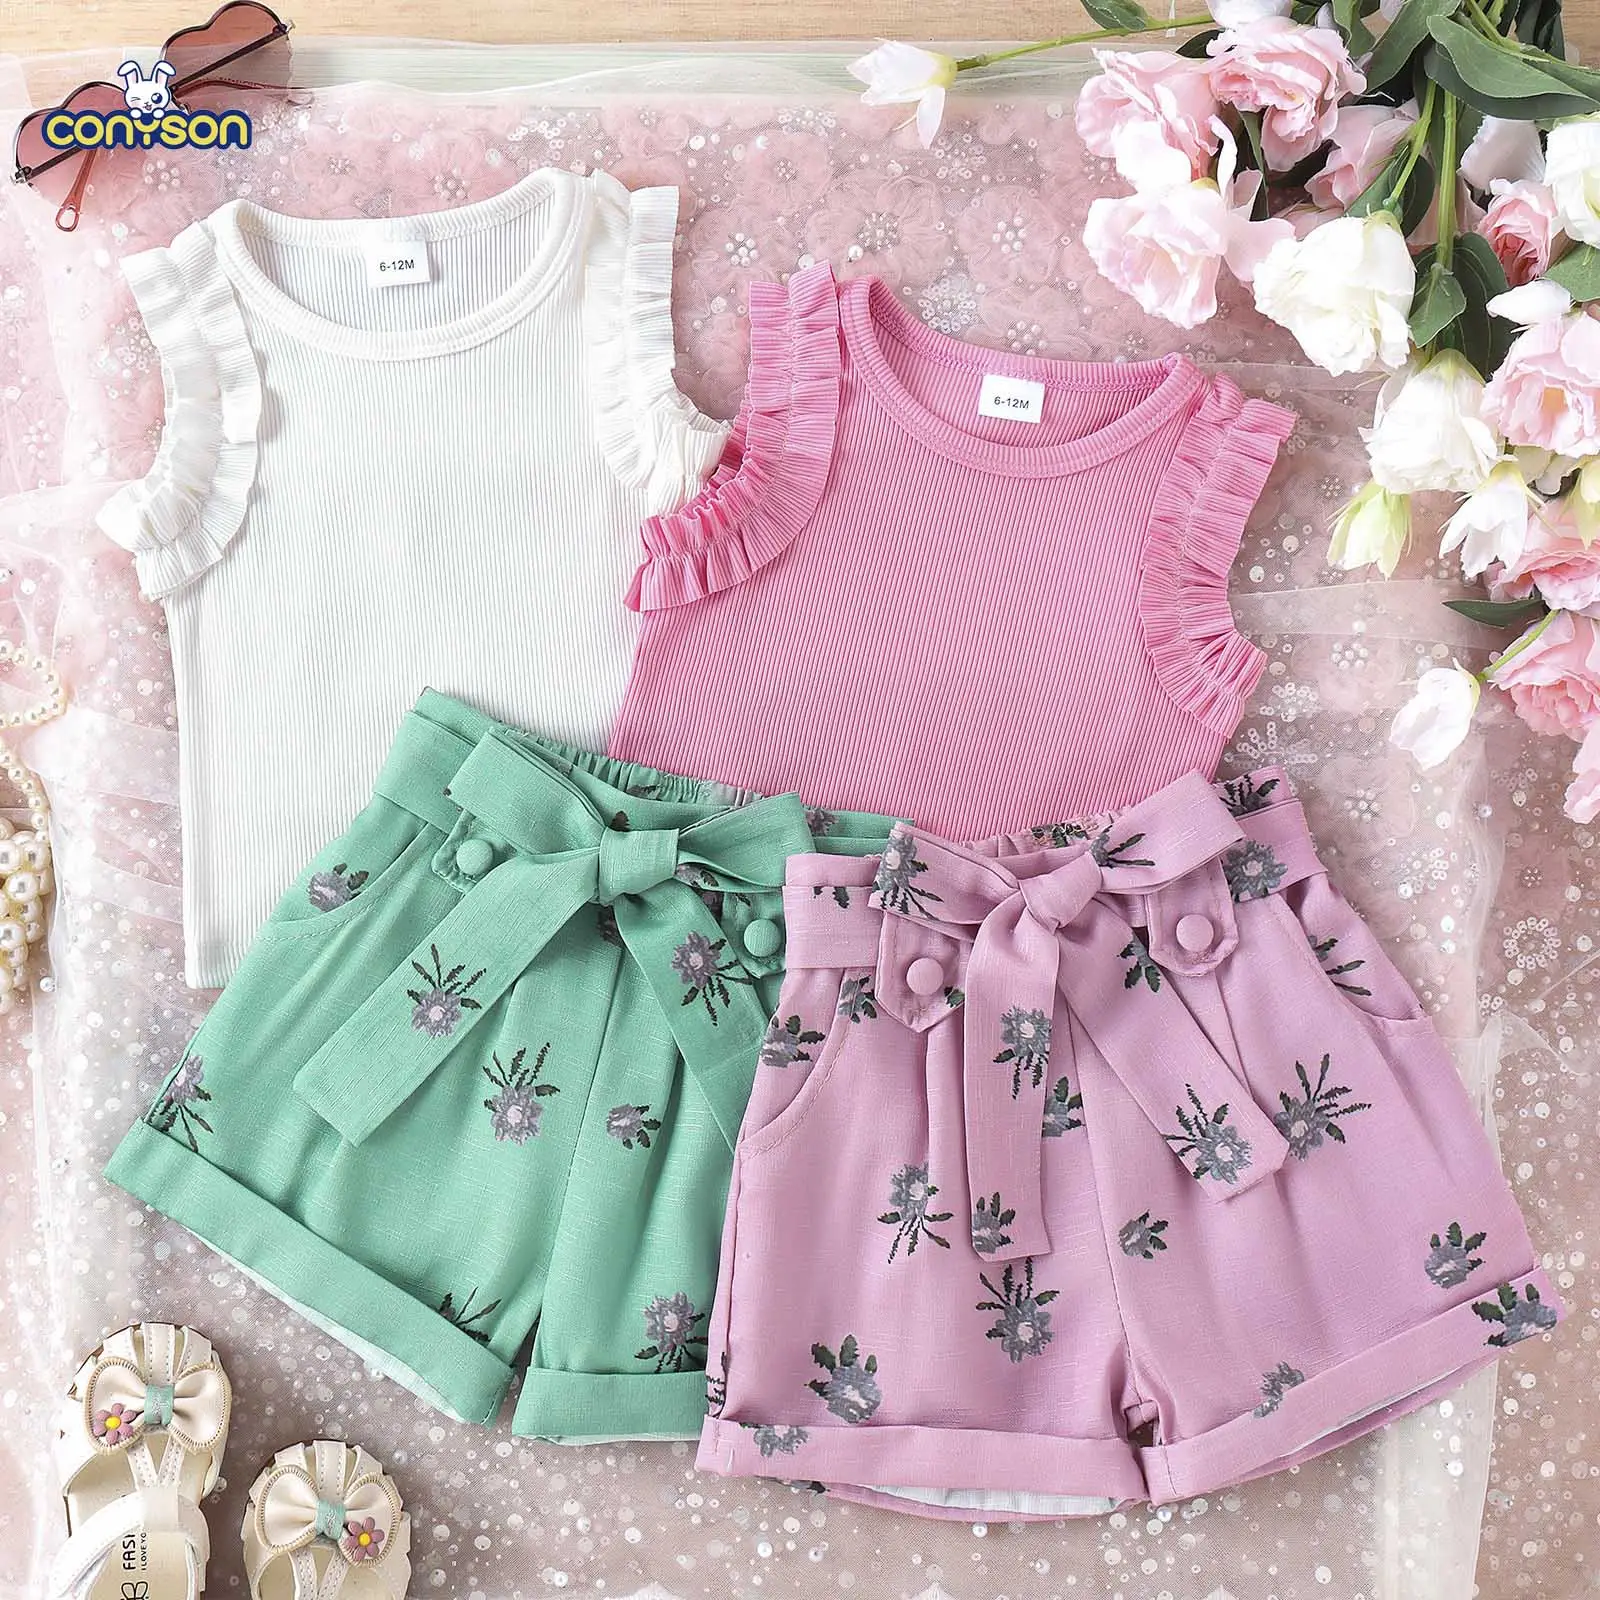 Conyson Conjunto de roupas para meninas 0-4T sem mangas, colete com estampa floral, shorts, roupas infantis, conjunto de roupas de verão para meninas